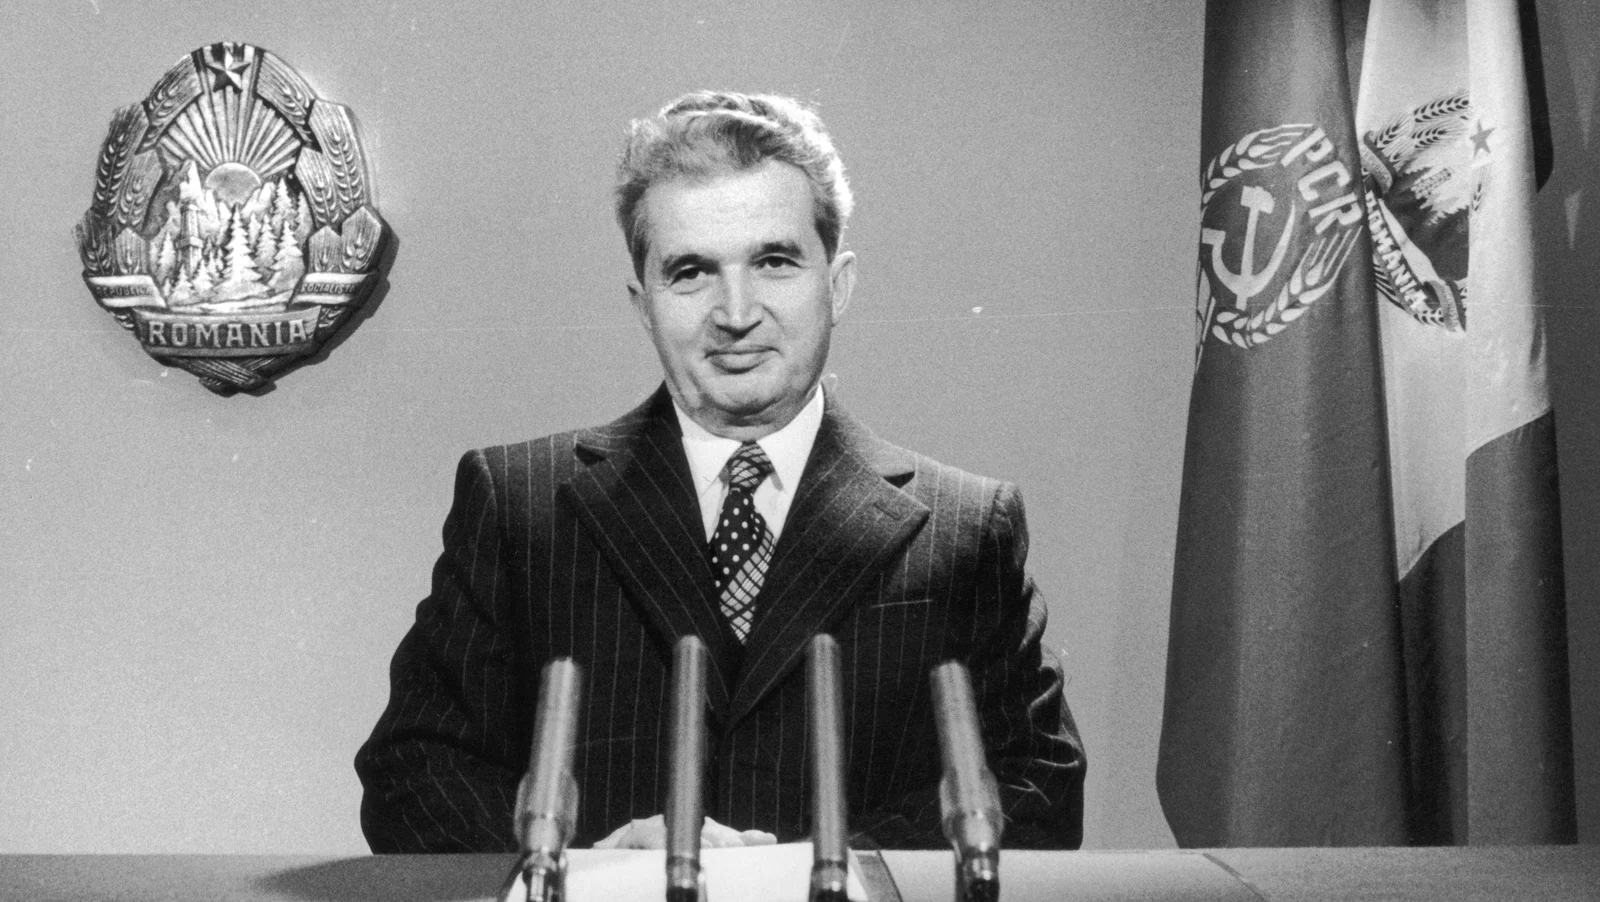 1989 Romanian President Nicolae Ceaușescu overthrown